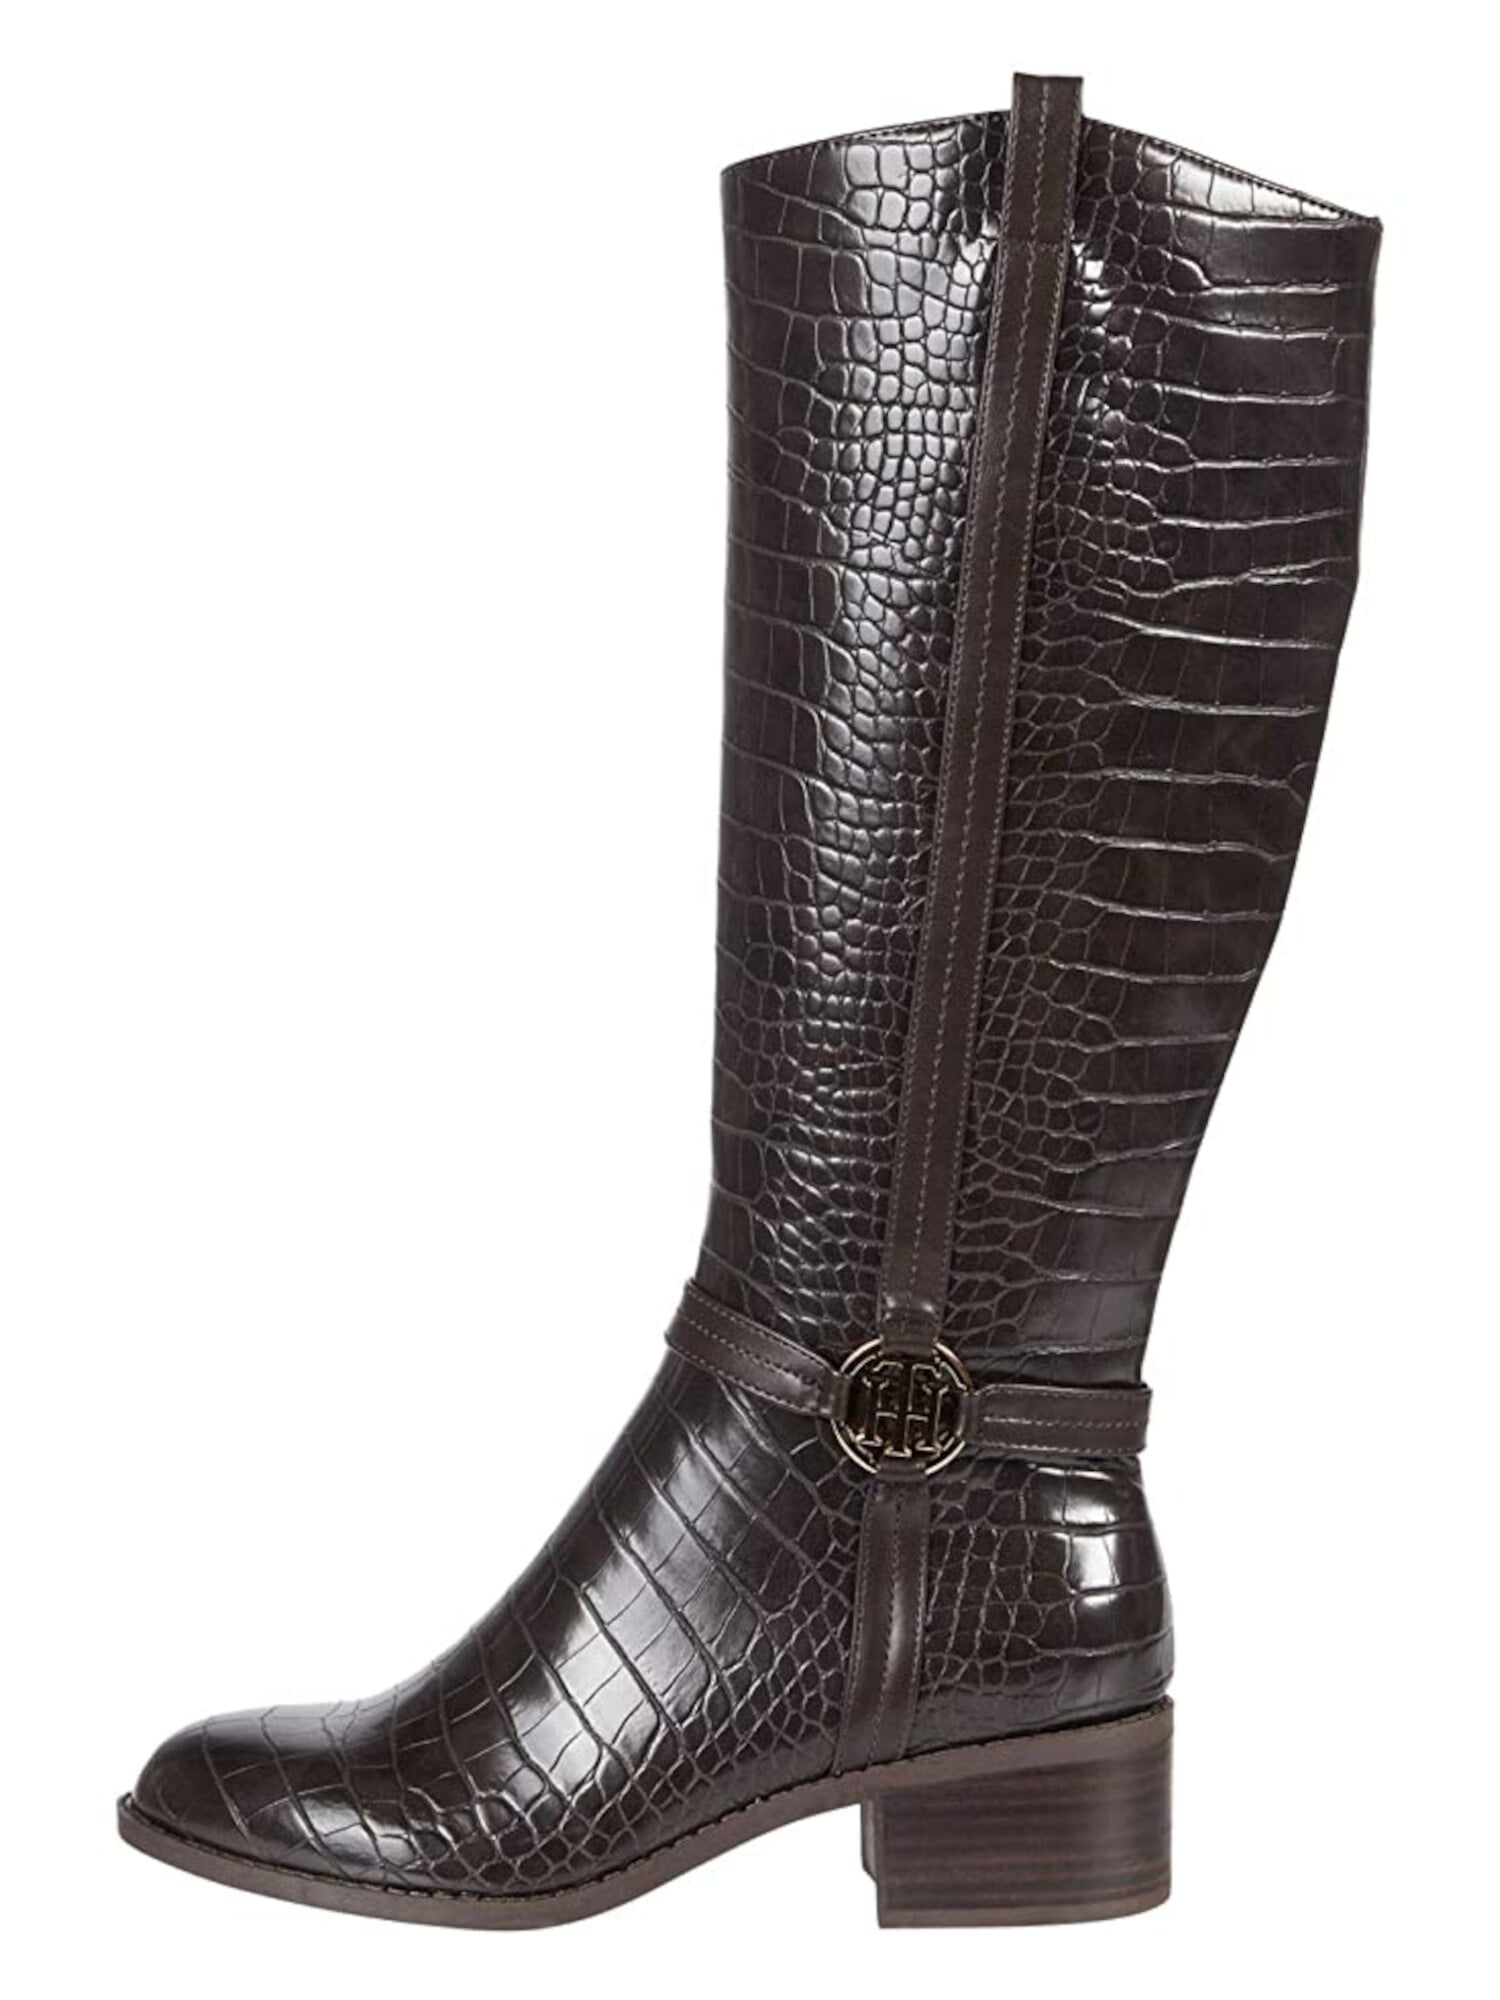 TOMMY HILFIGER Womens Brown Goring Padded Diwan Almond Toe Block Heel Riding Boot 8.5 M - Walmart.com